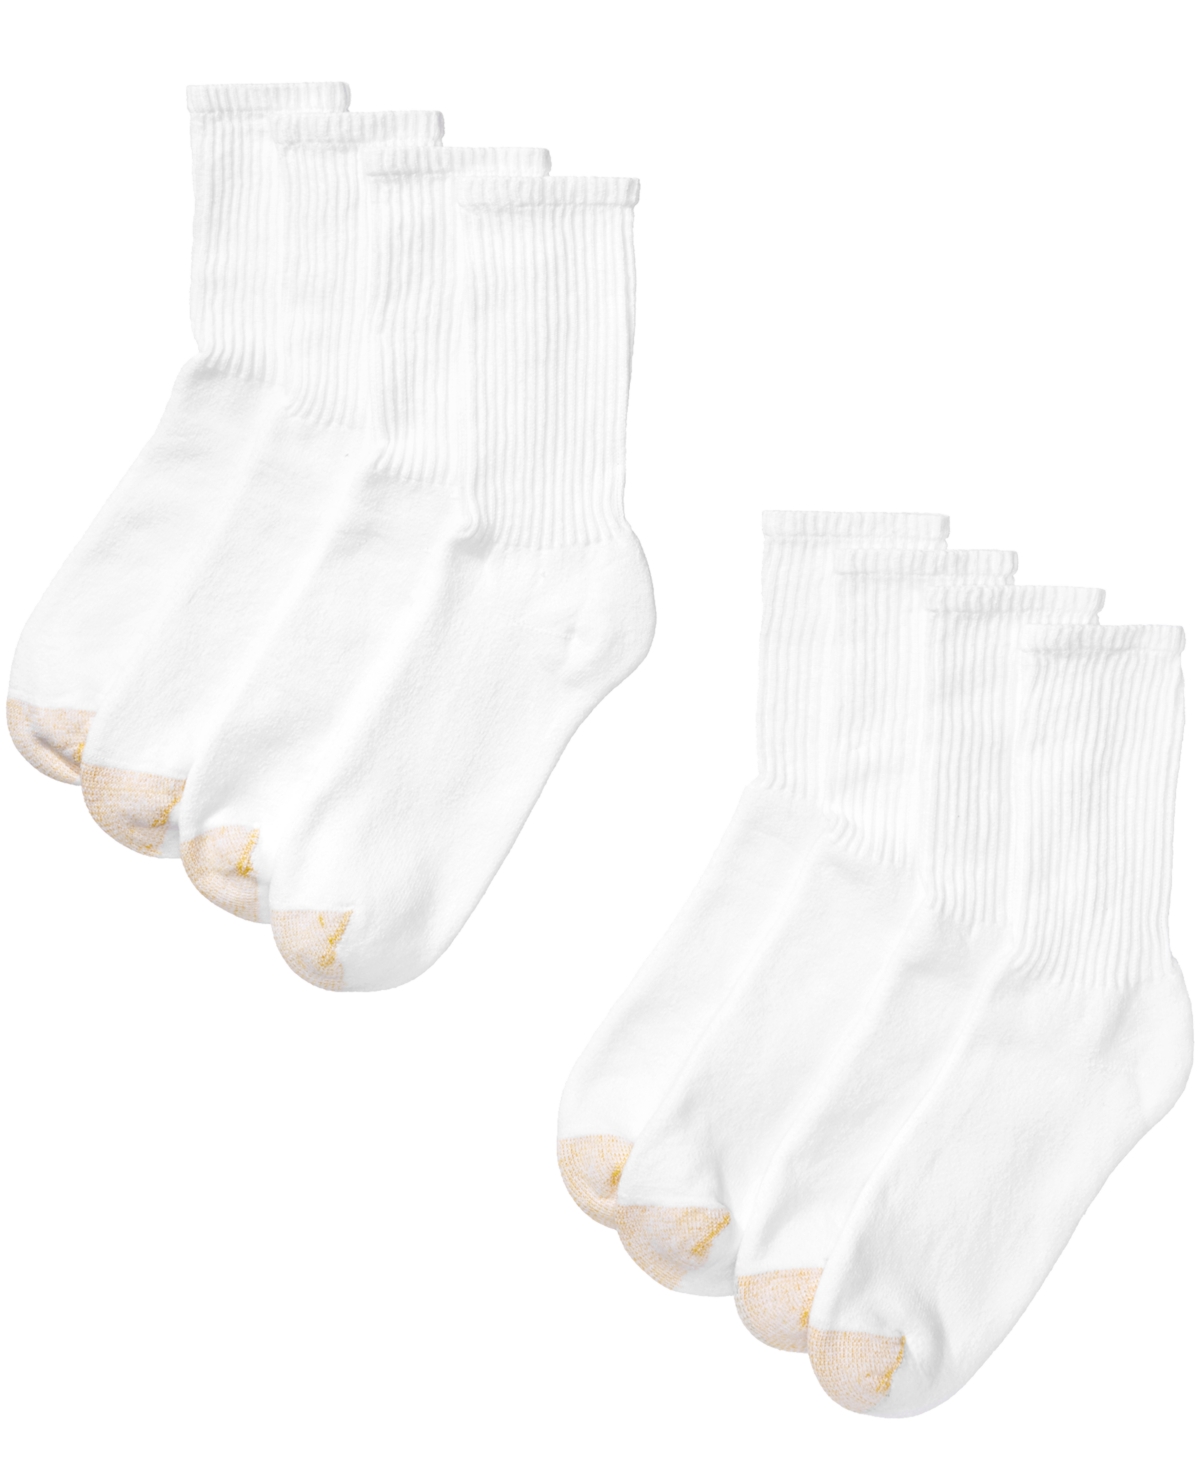 Gold Toe Men's 8-Pack Crew Socks | Smart Closet